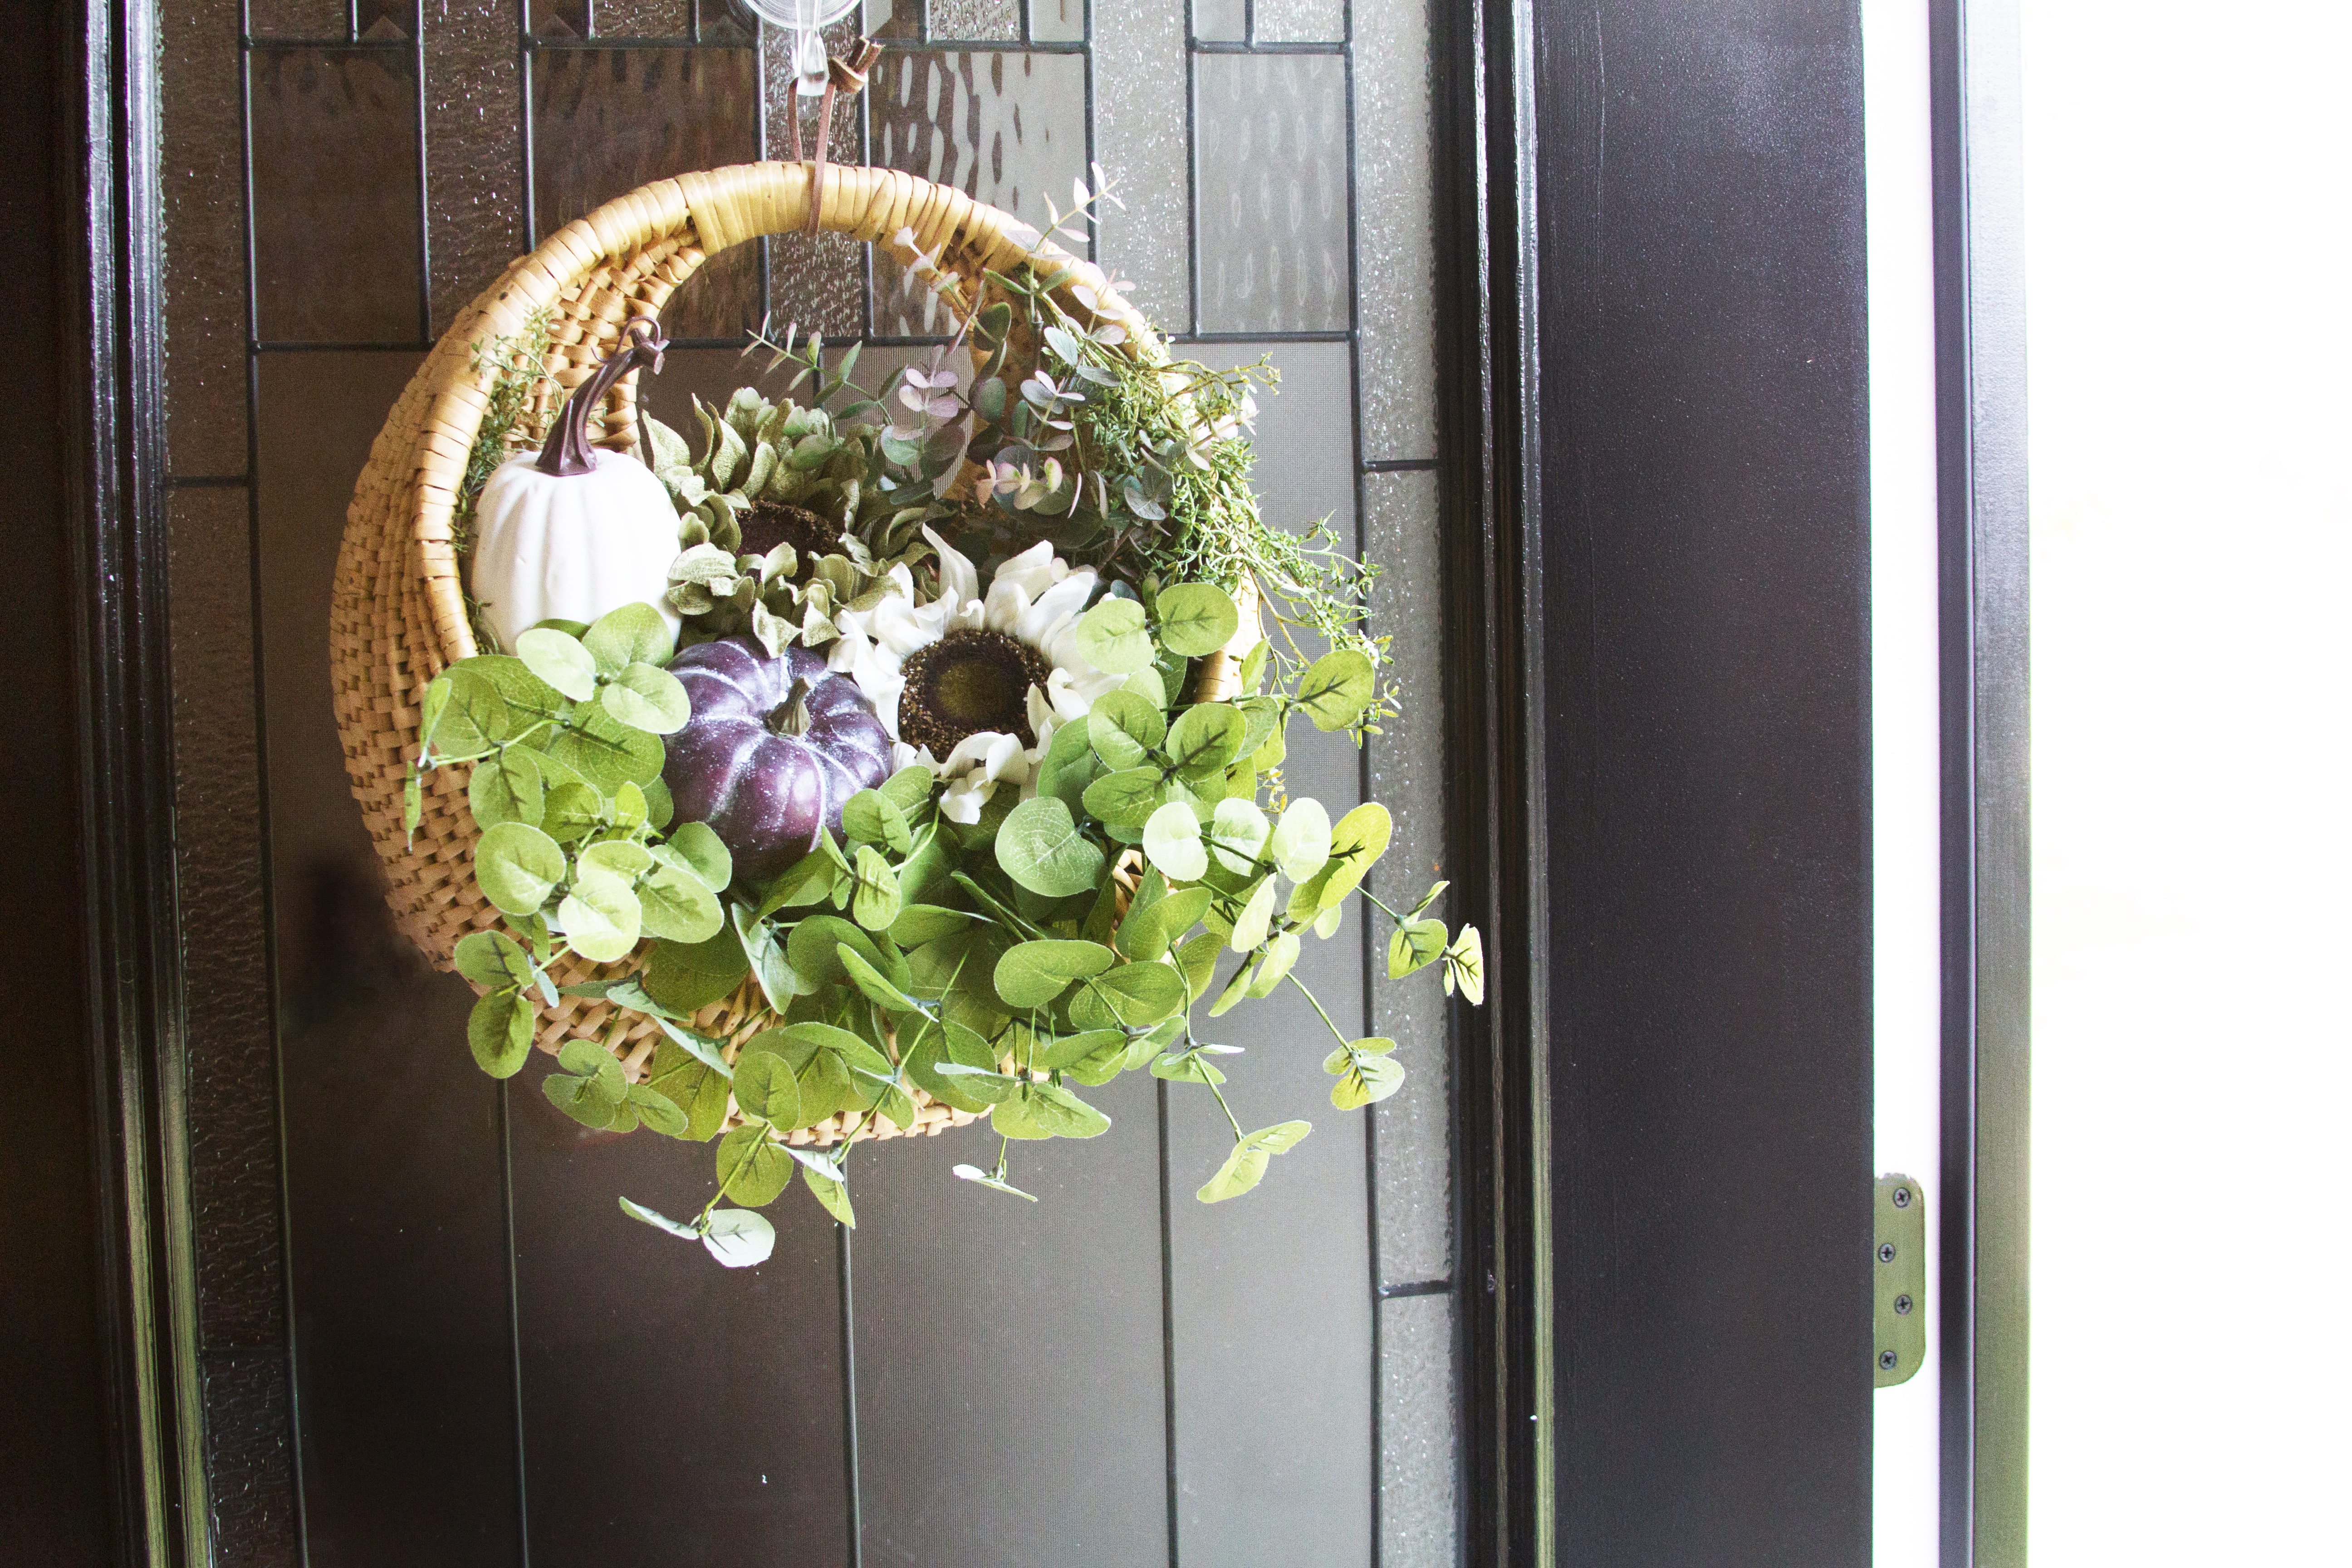 https://craftivitydesigns.com/wp-content/uploads/2019/09/basket-wreath09-1.jpg